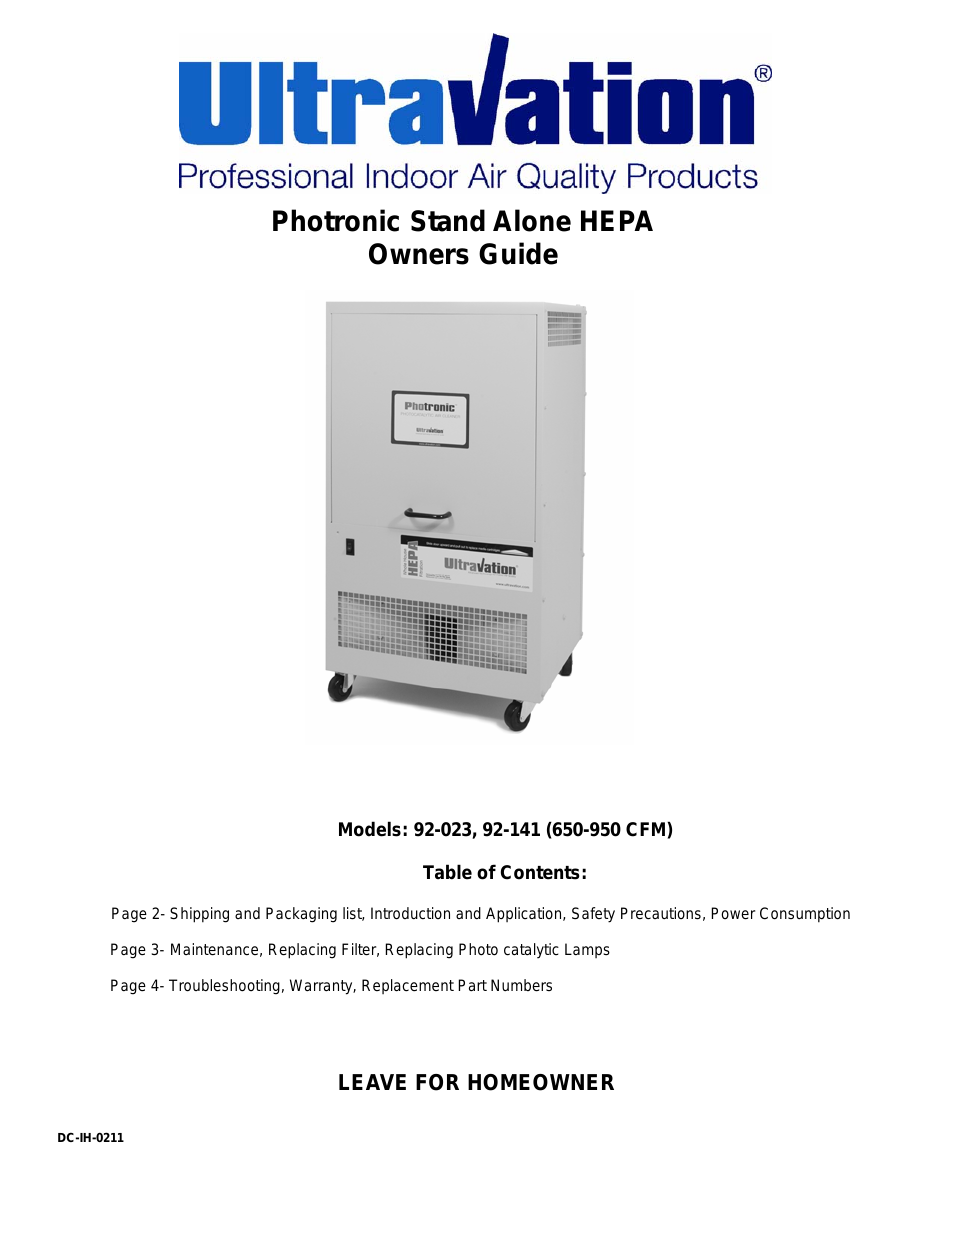 Photronic HEPA Portable Room Air Purifier - DC-IH-0211